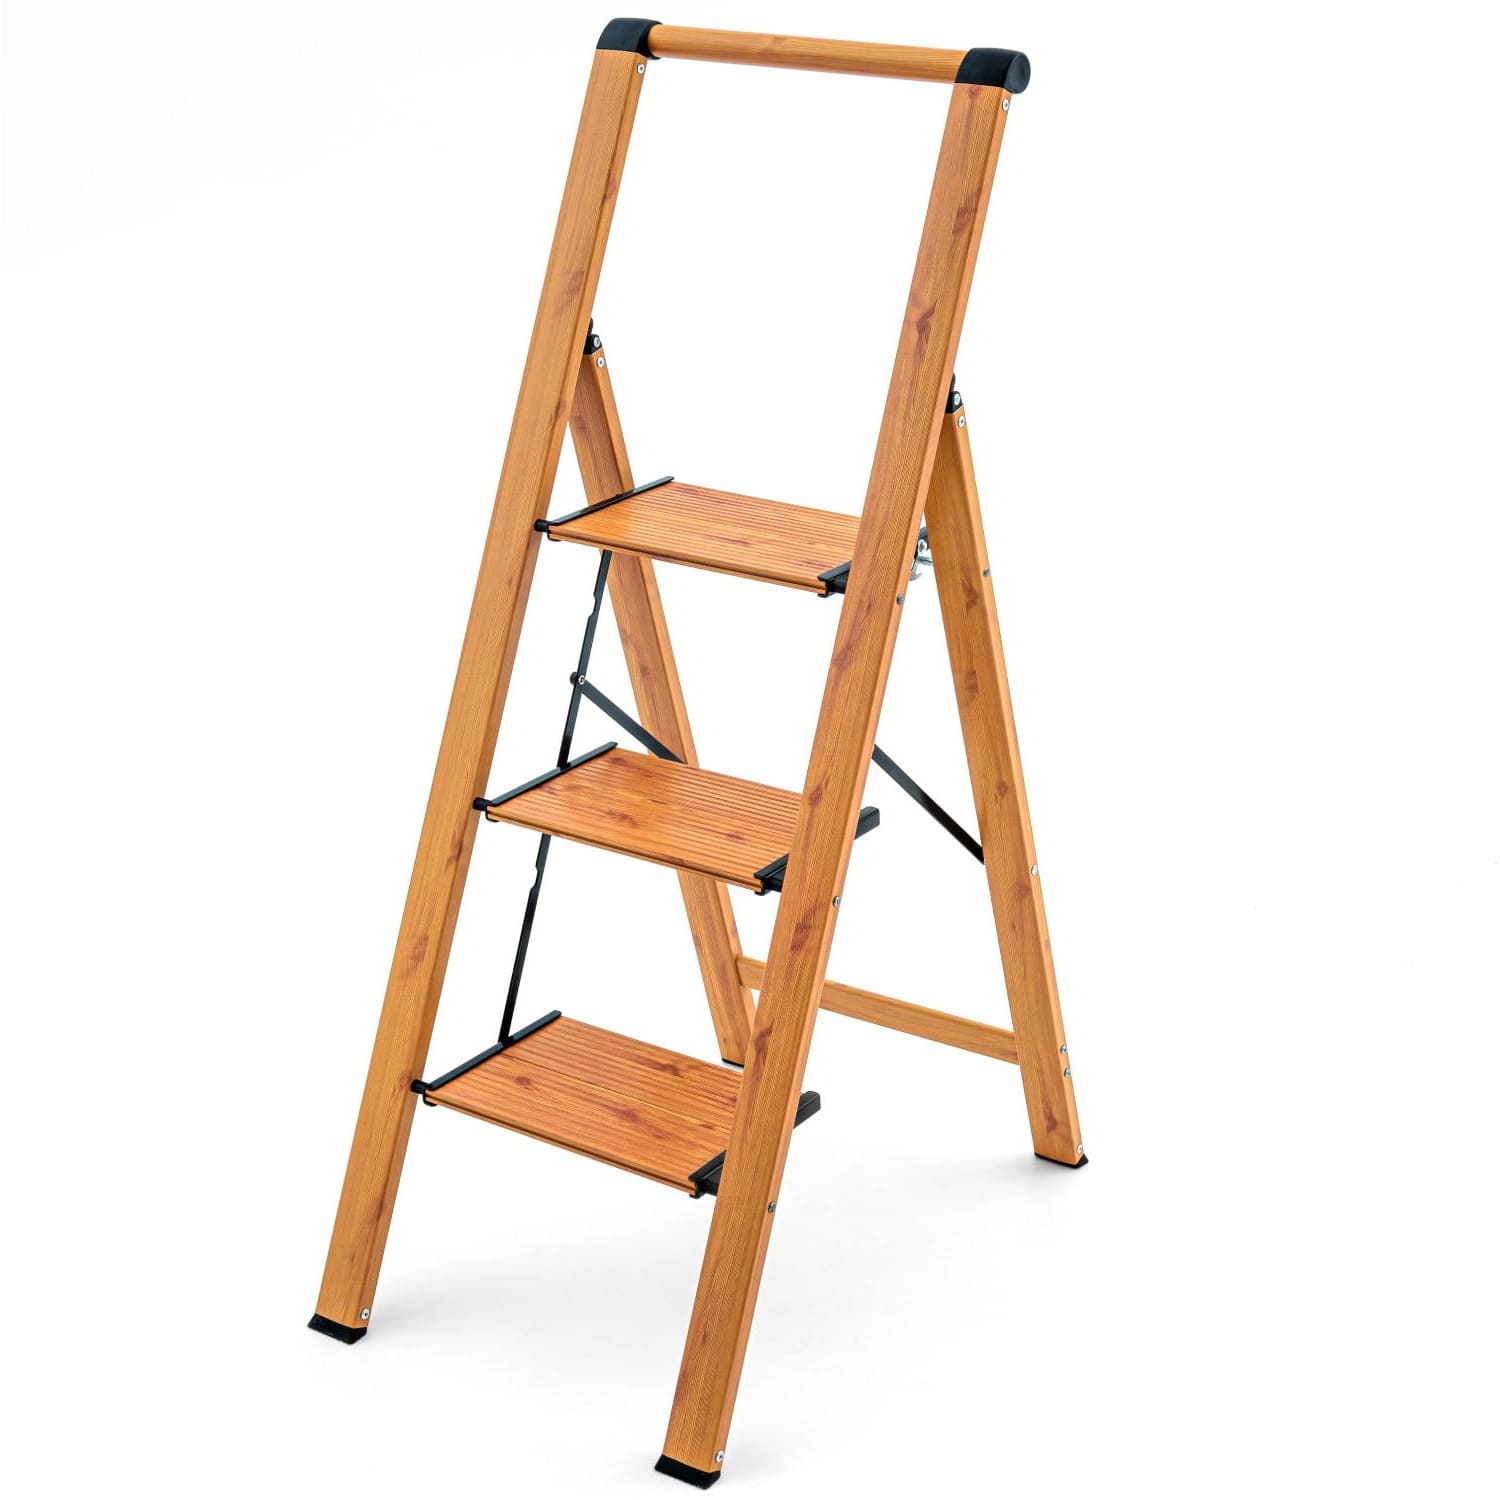 3 Step Ladder, Folding Step Ladder, Tall Step Ladder, Step Ladder with Handrail, Kitchen Step Ladder, Step up Ladder